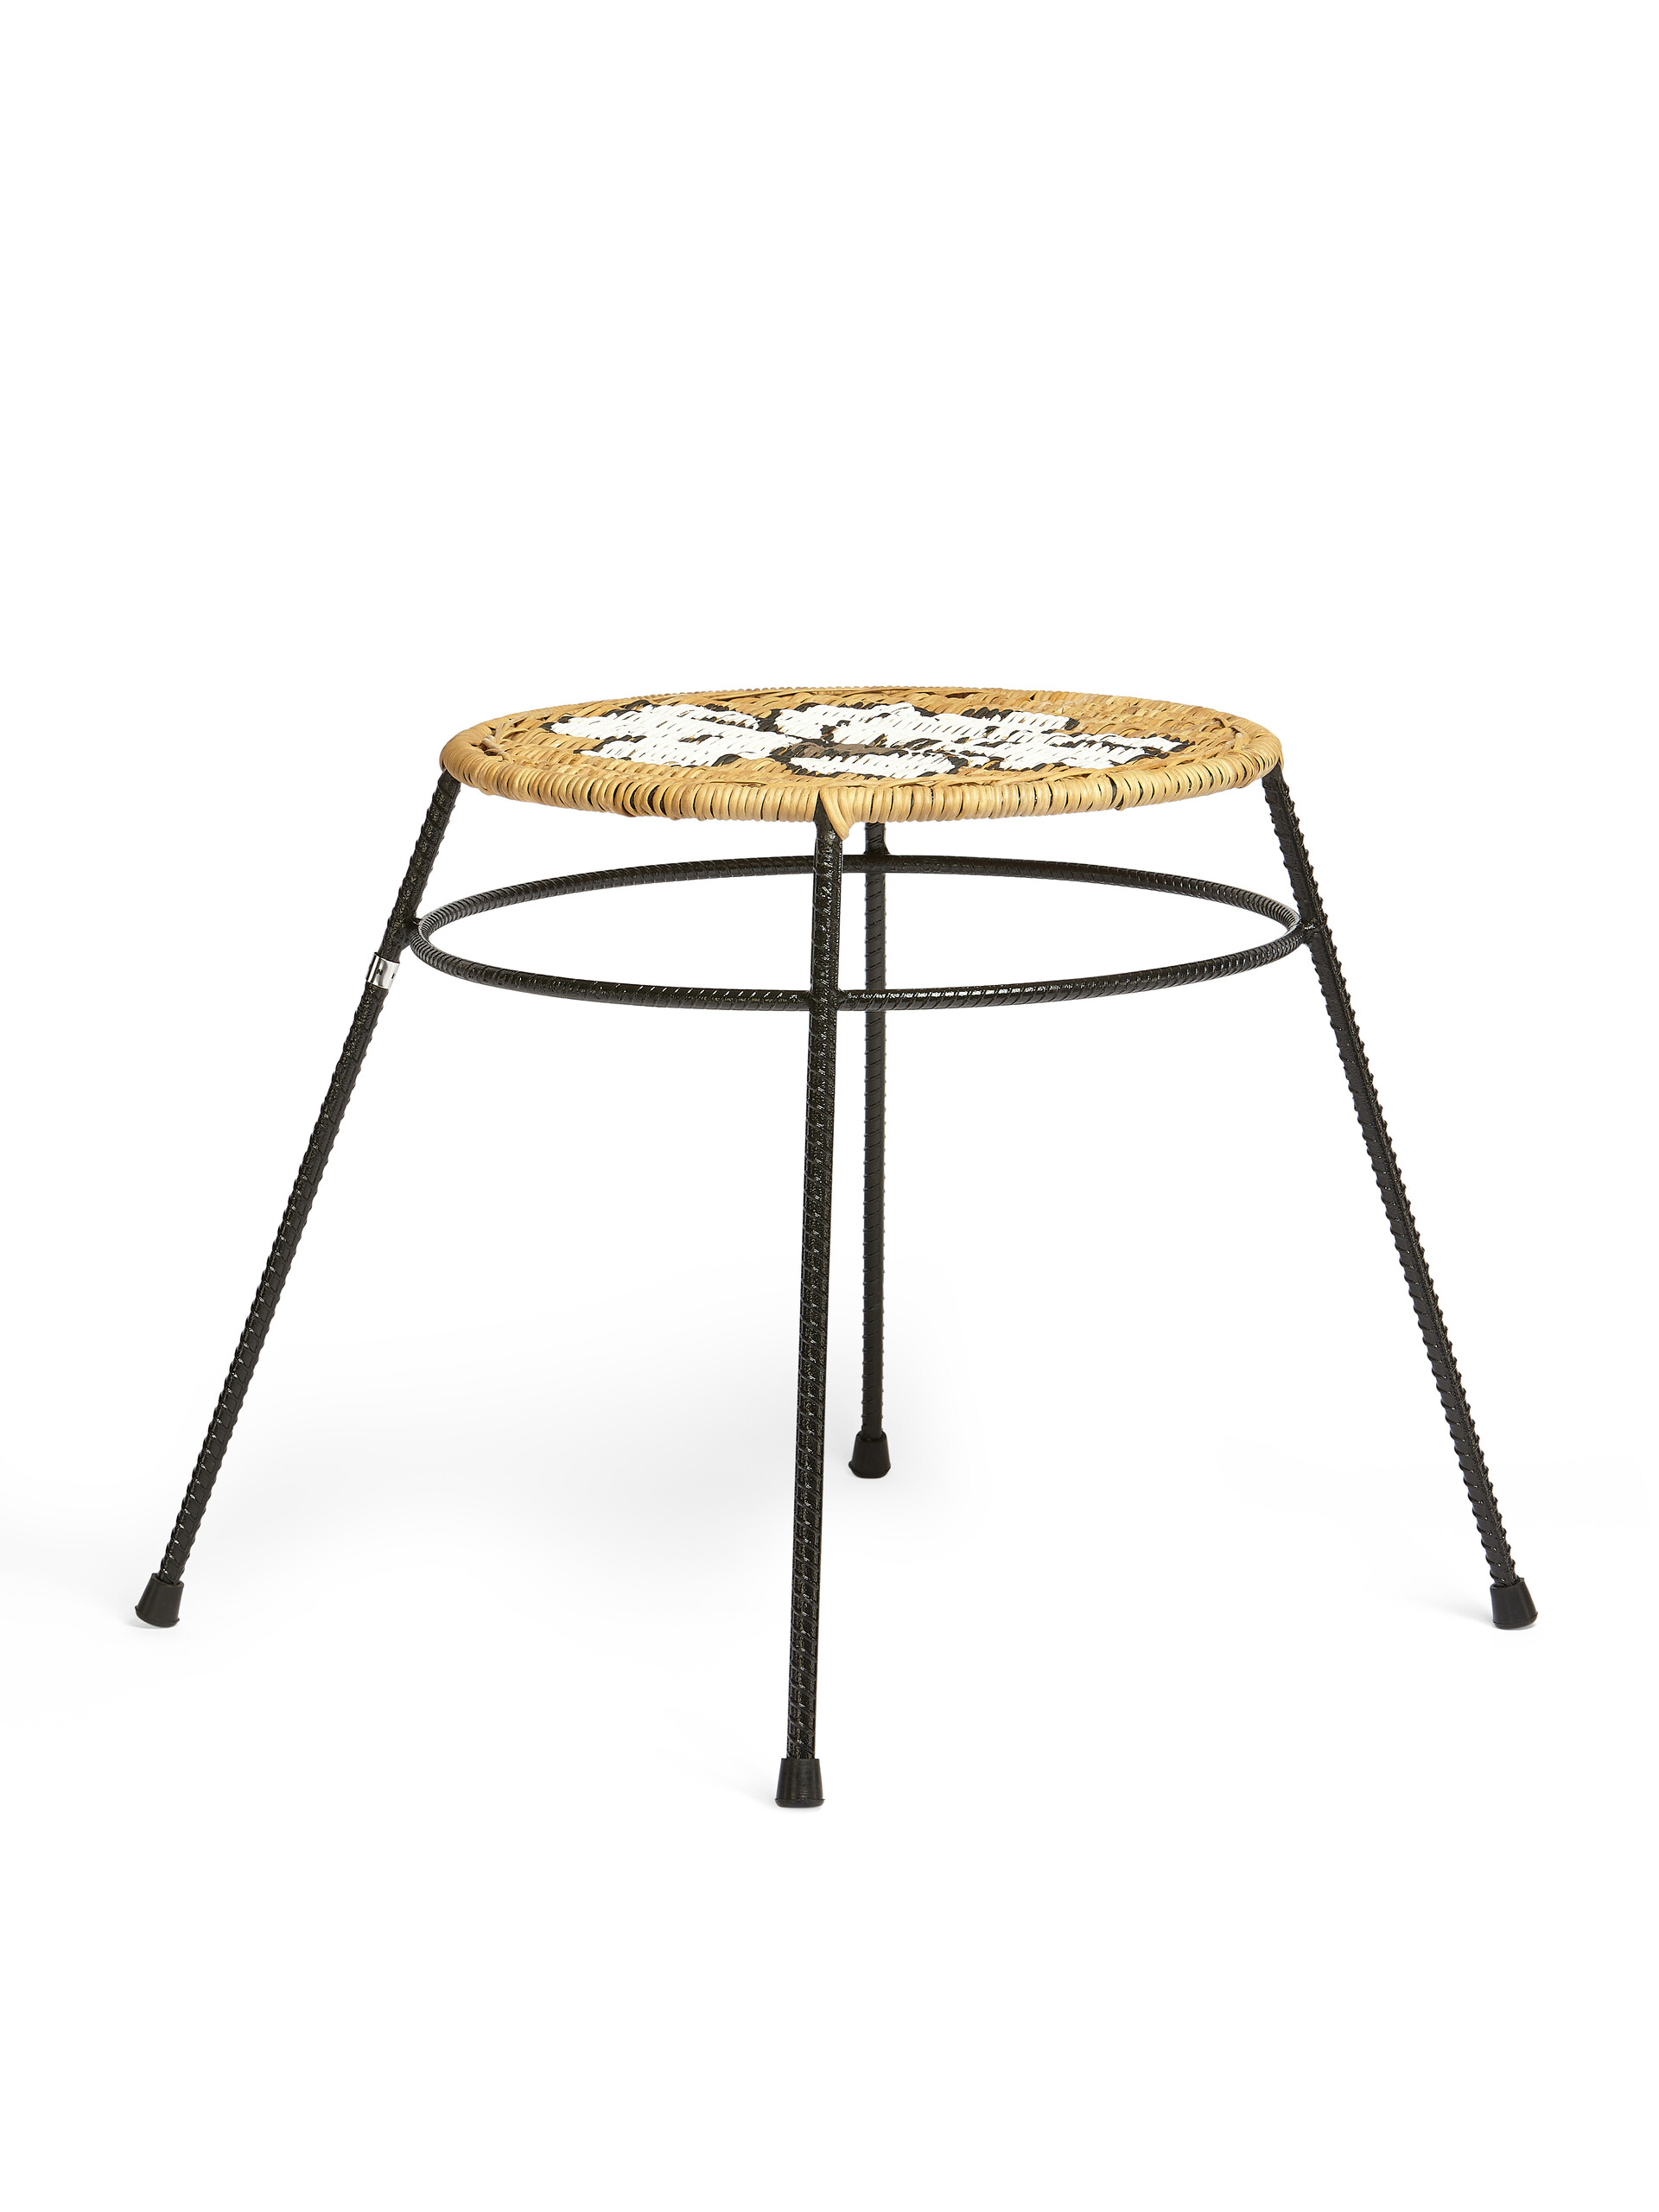 MARNI MARKET iron natural fibre flower stool-table - Furniture - Image 2